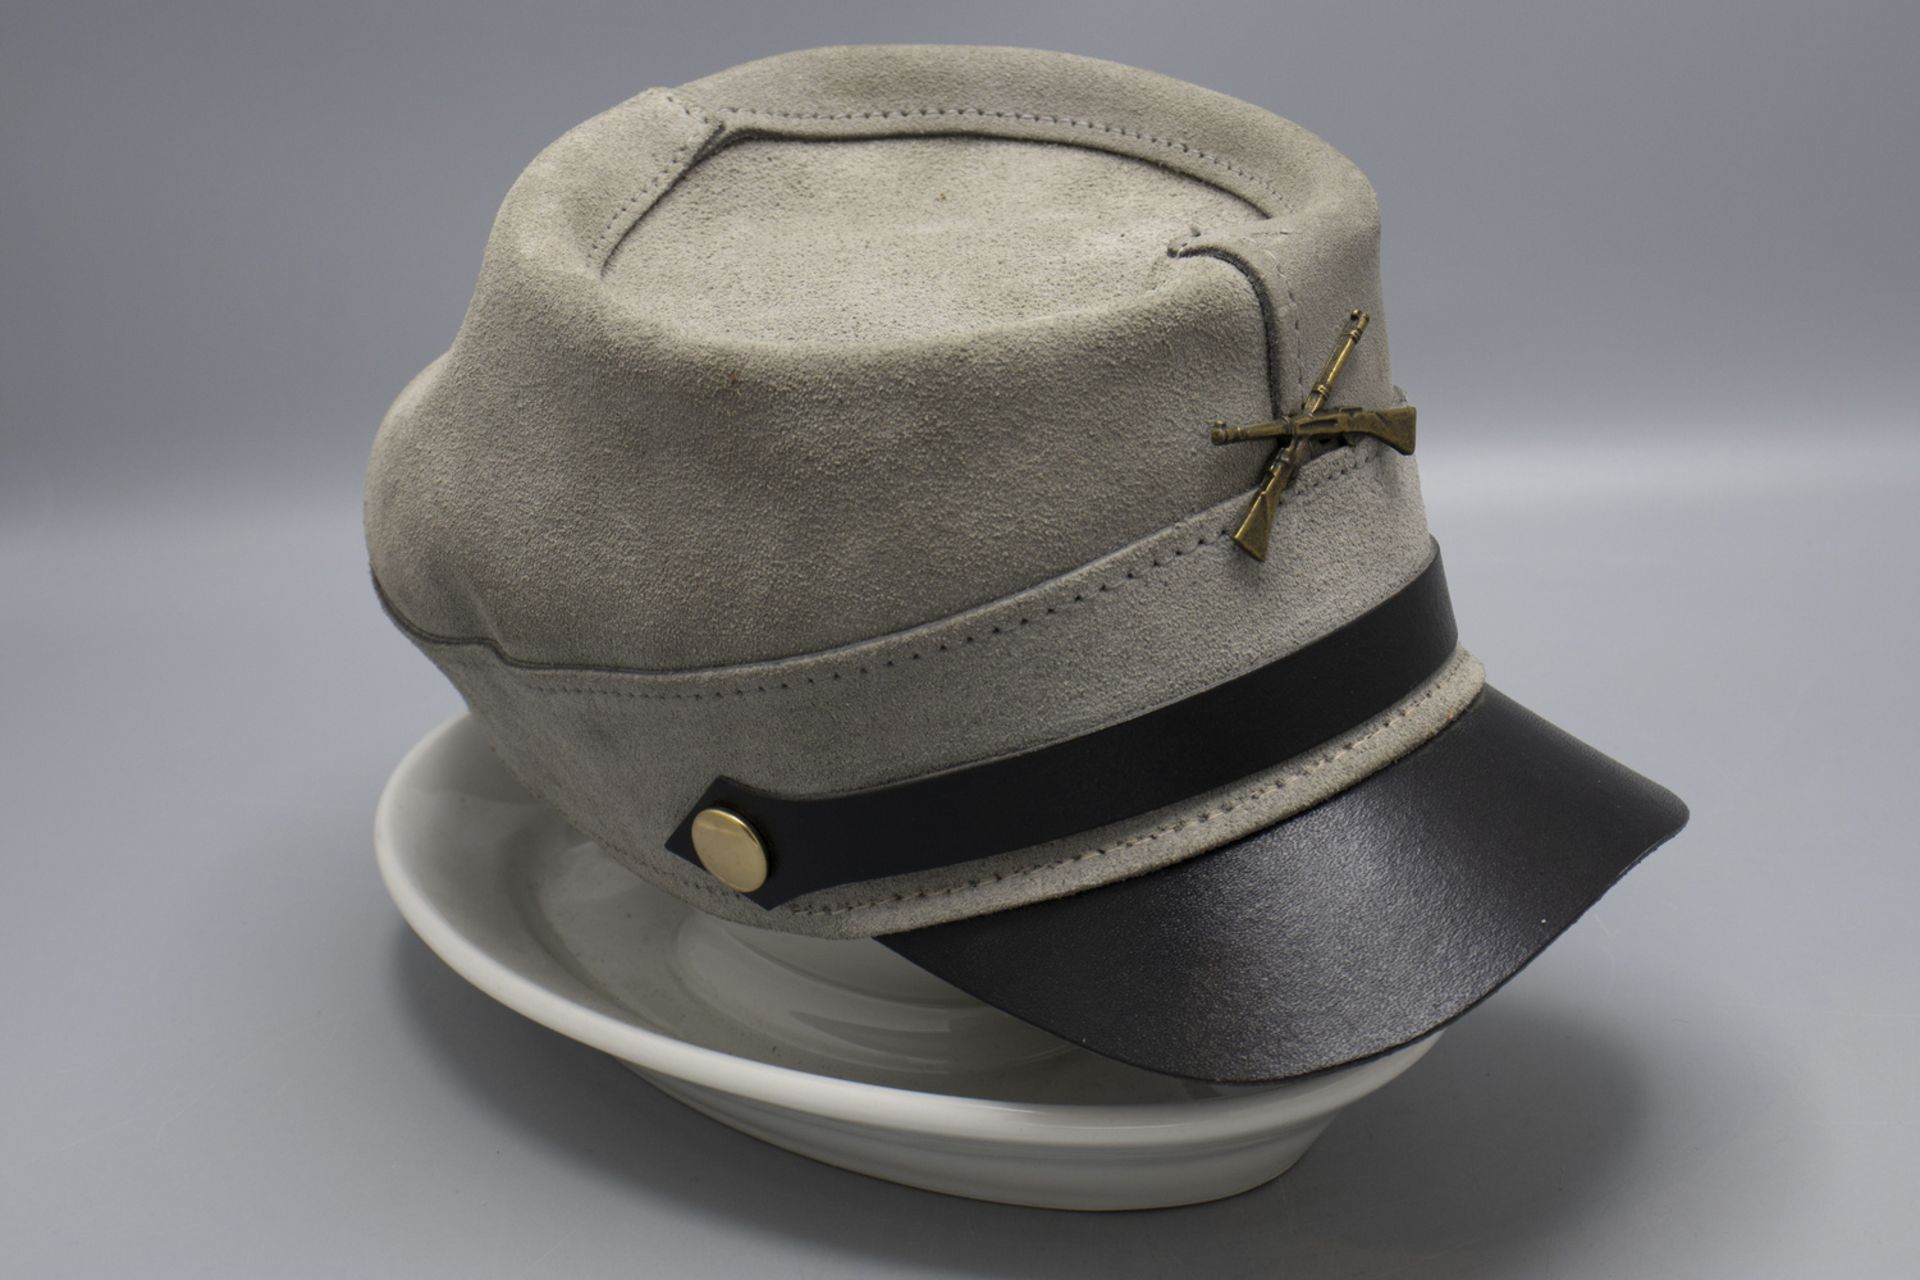 Schirmmütze / A peaked cap, Hat Quaters USA